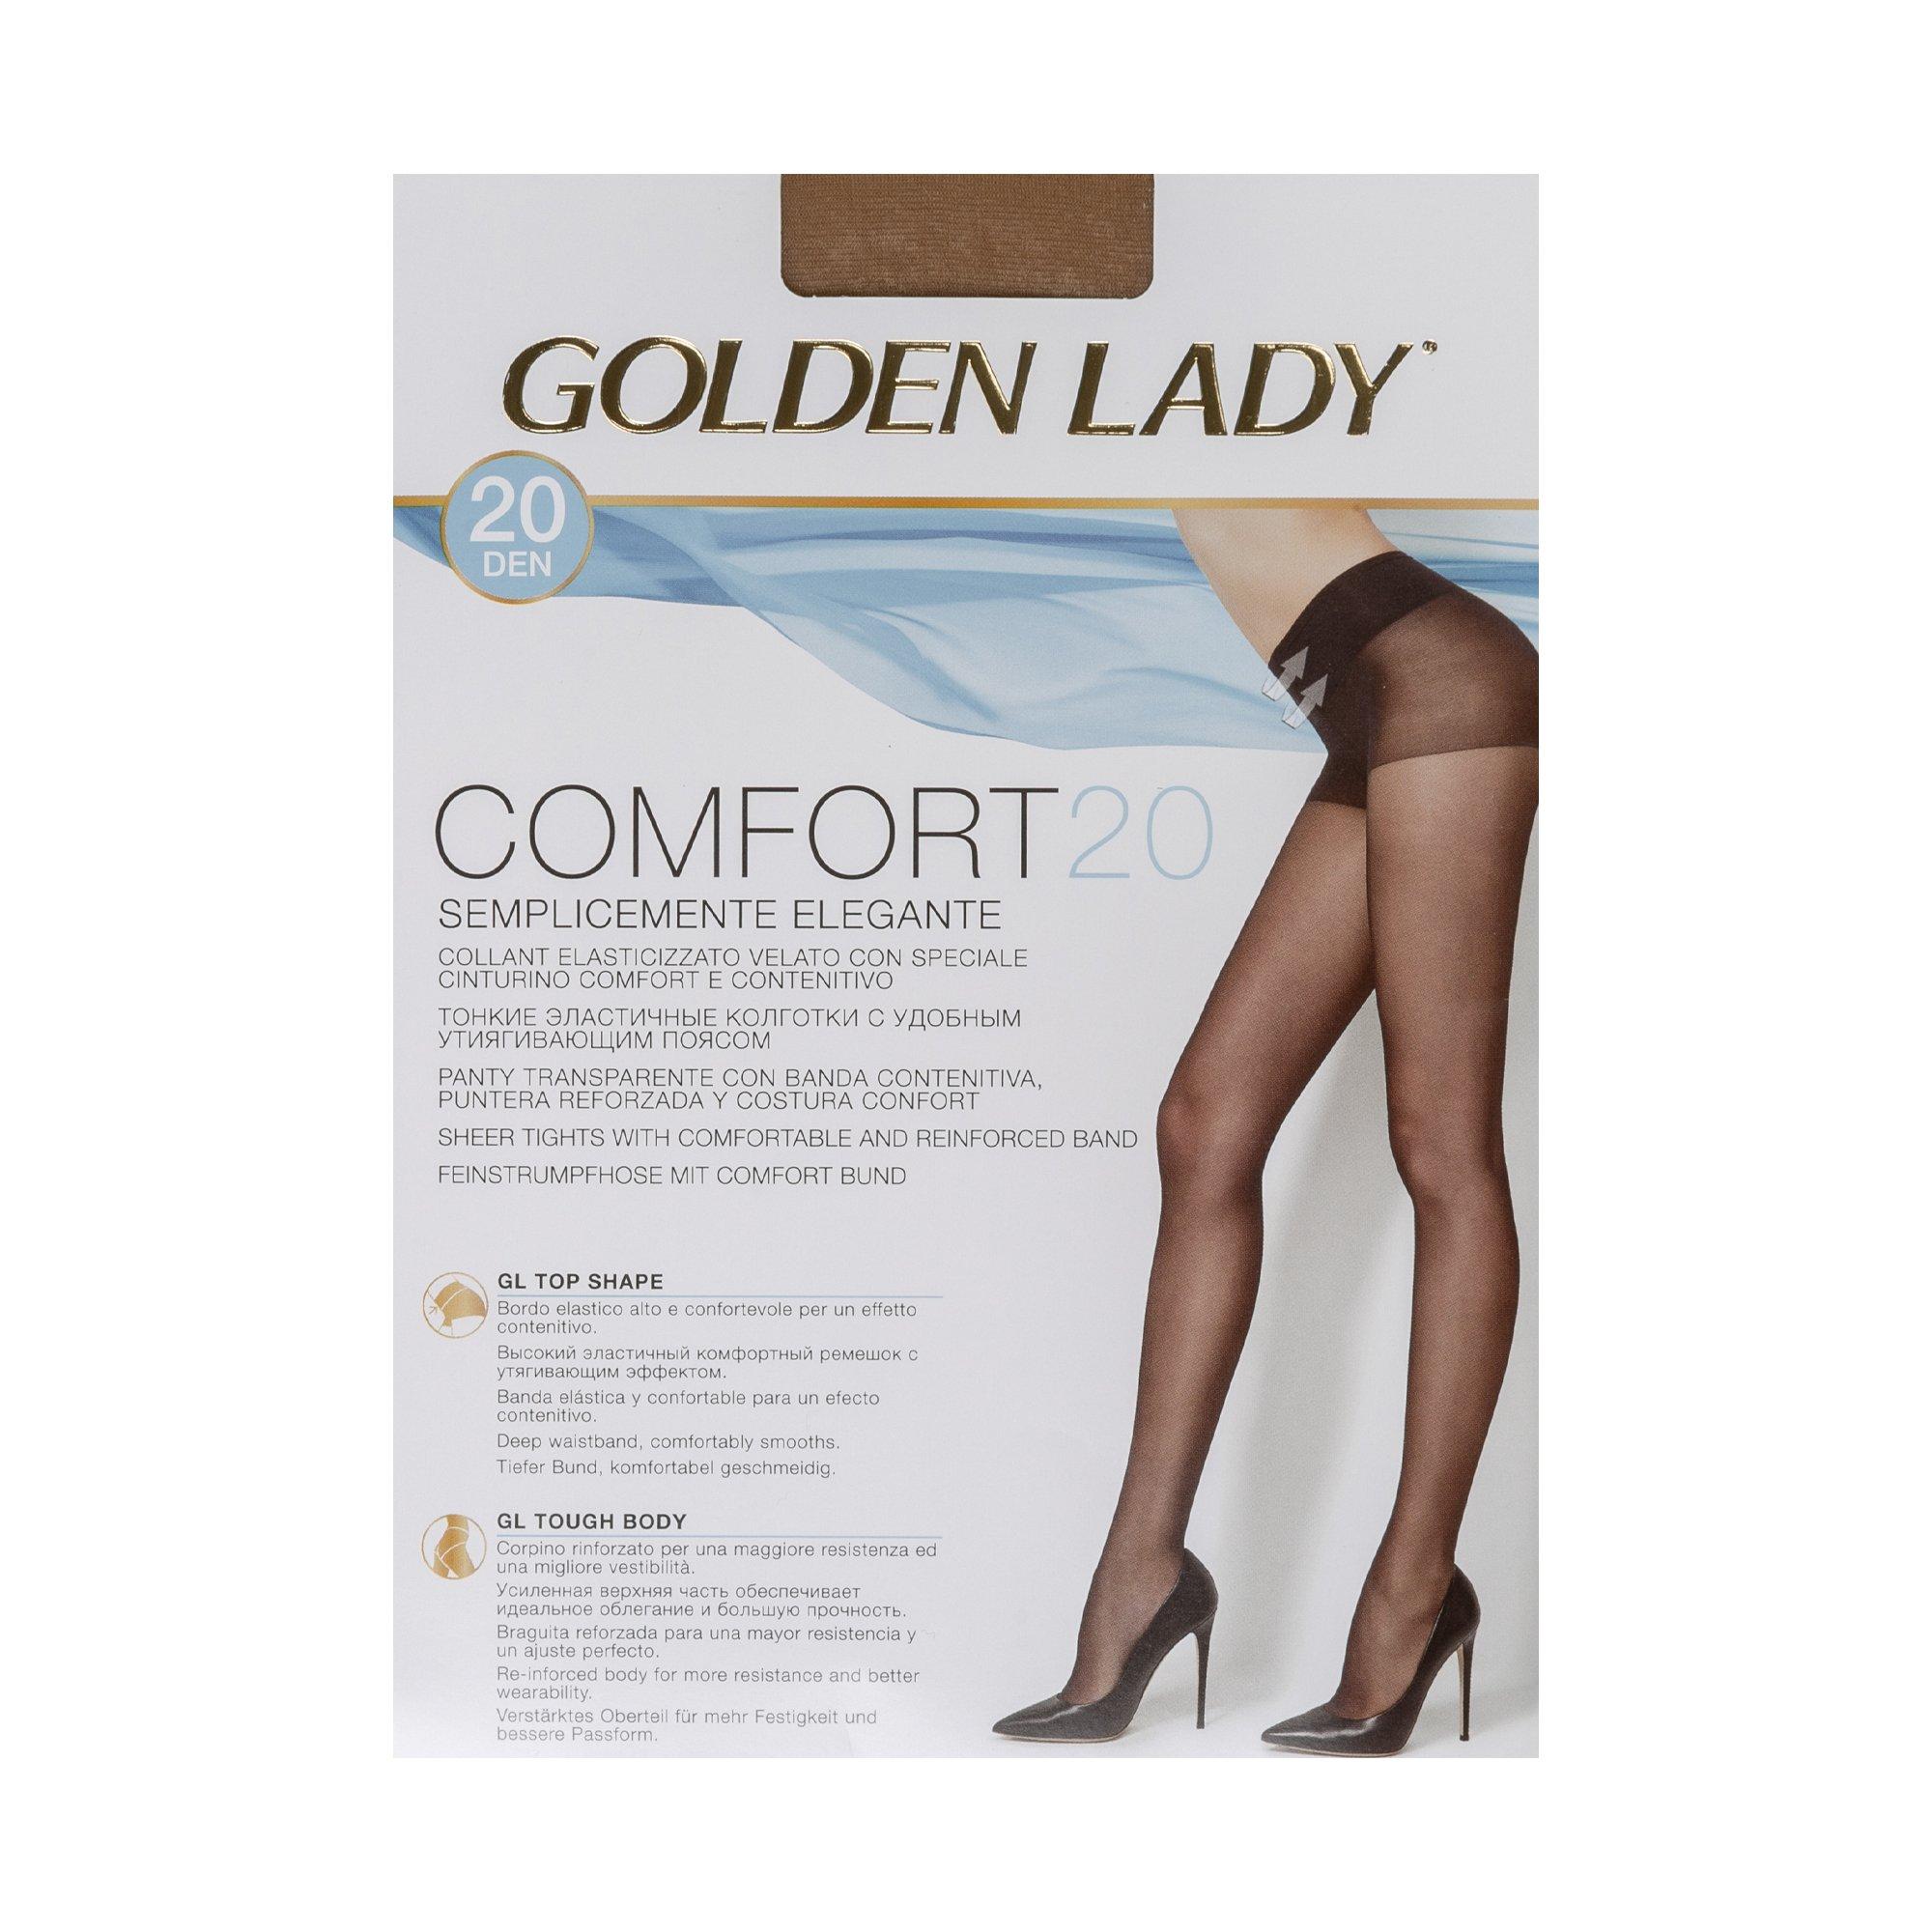 GOLDEN LADY Comfort 20 Strumpfhose, 20 Den 